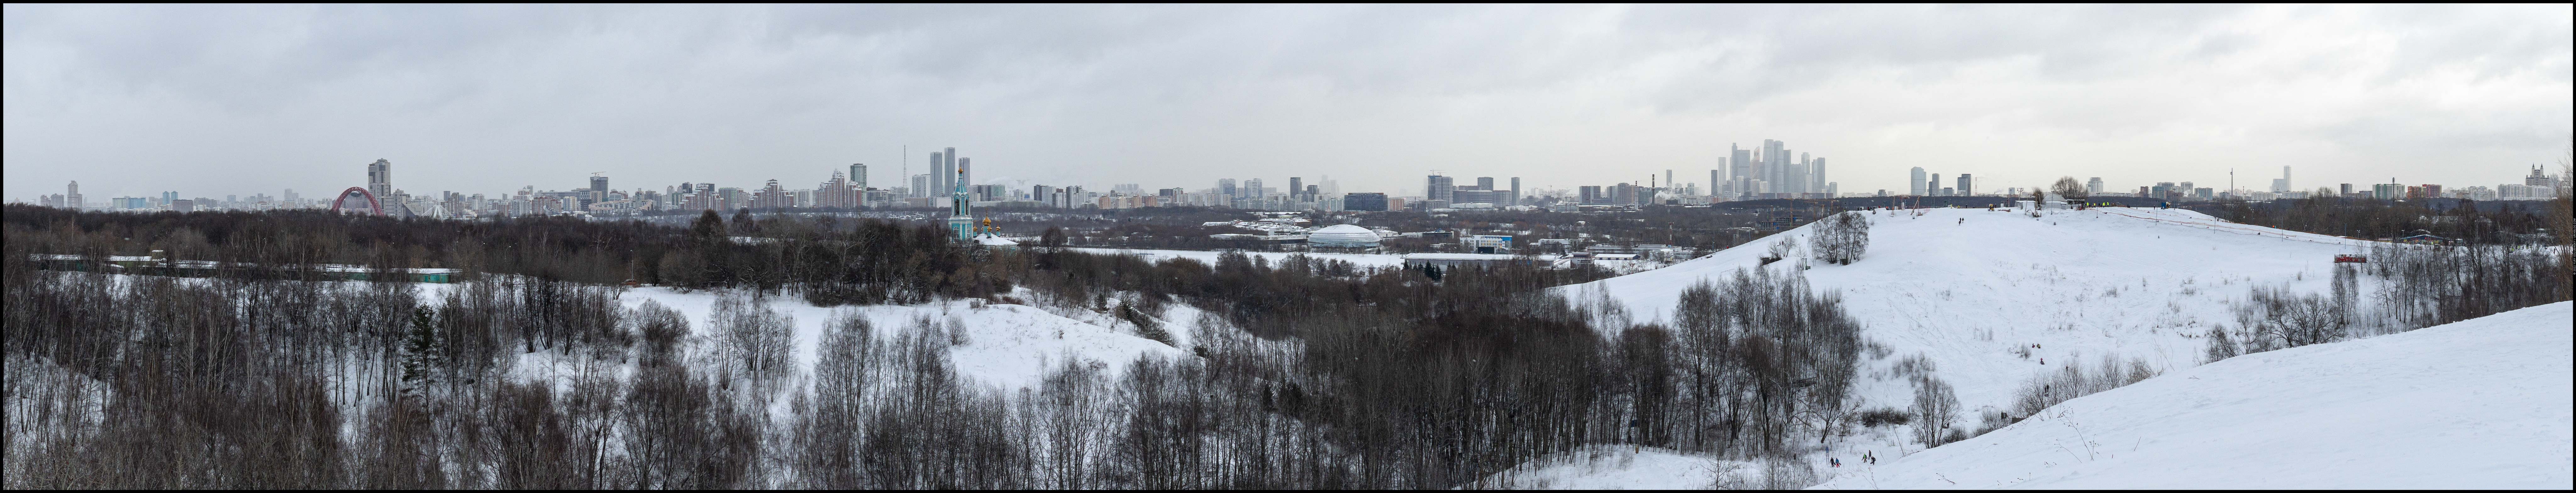 City, Krylatskie Holmy, Moscow, Russia, winter, hill, snow, park, trees